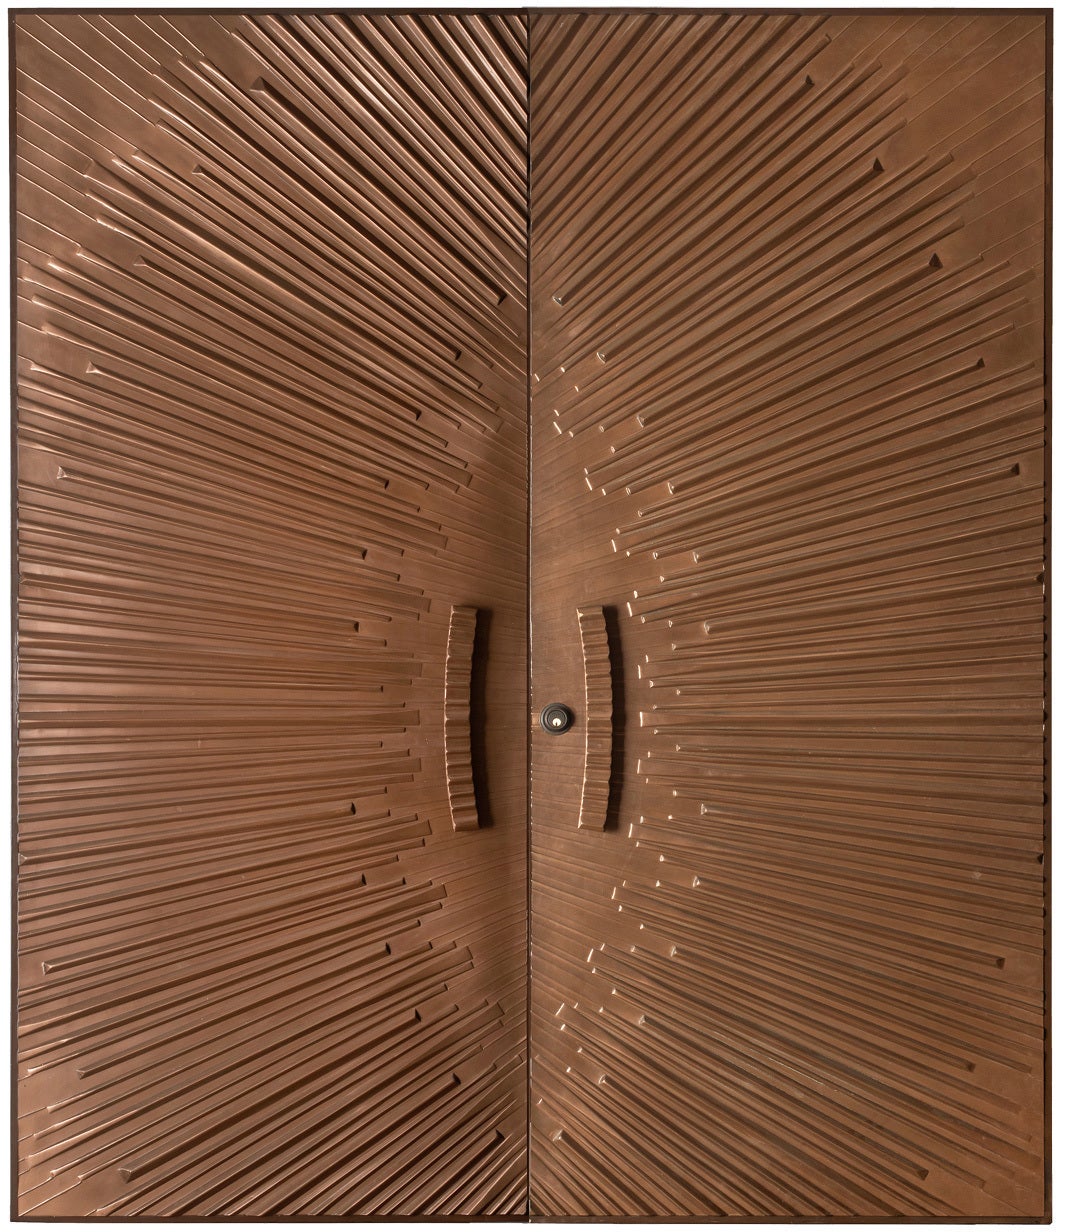 California Modern Sunburst Doors by Kaylien c.1970.